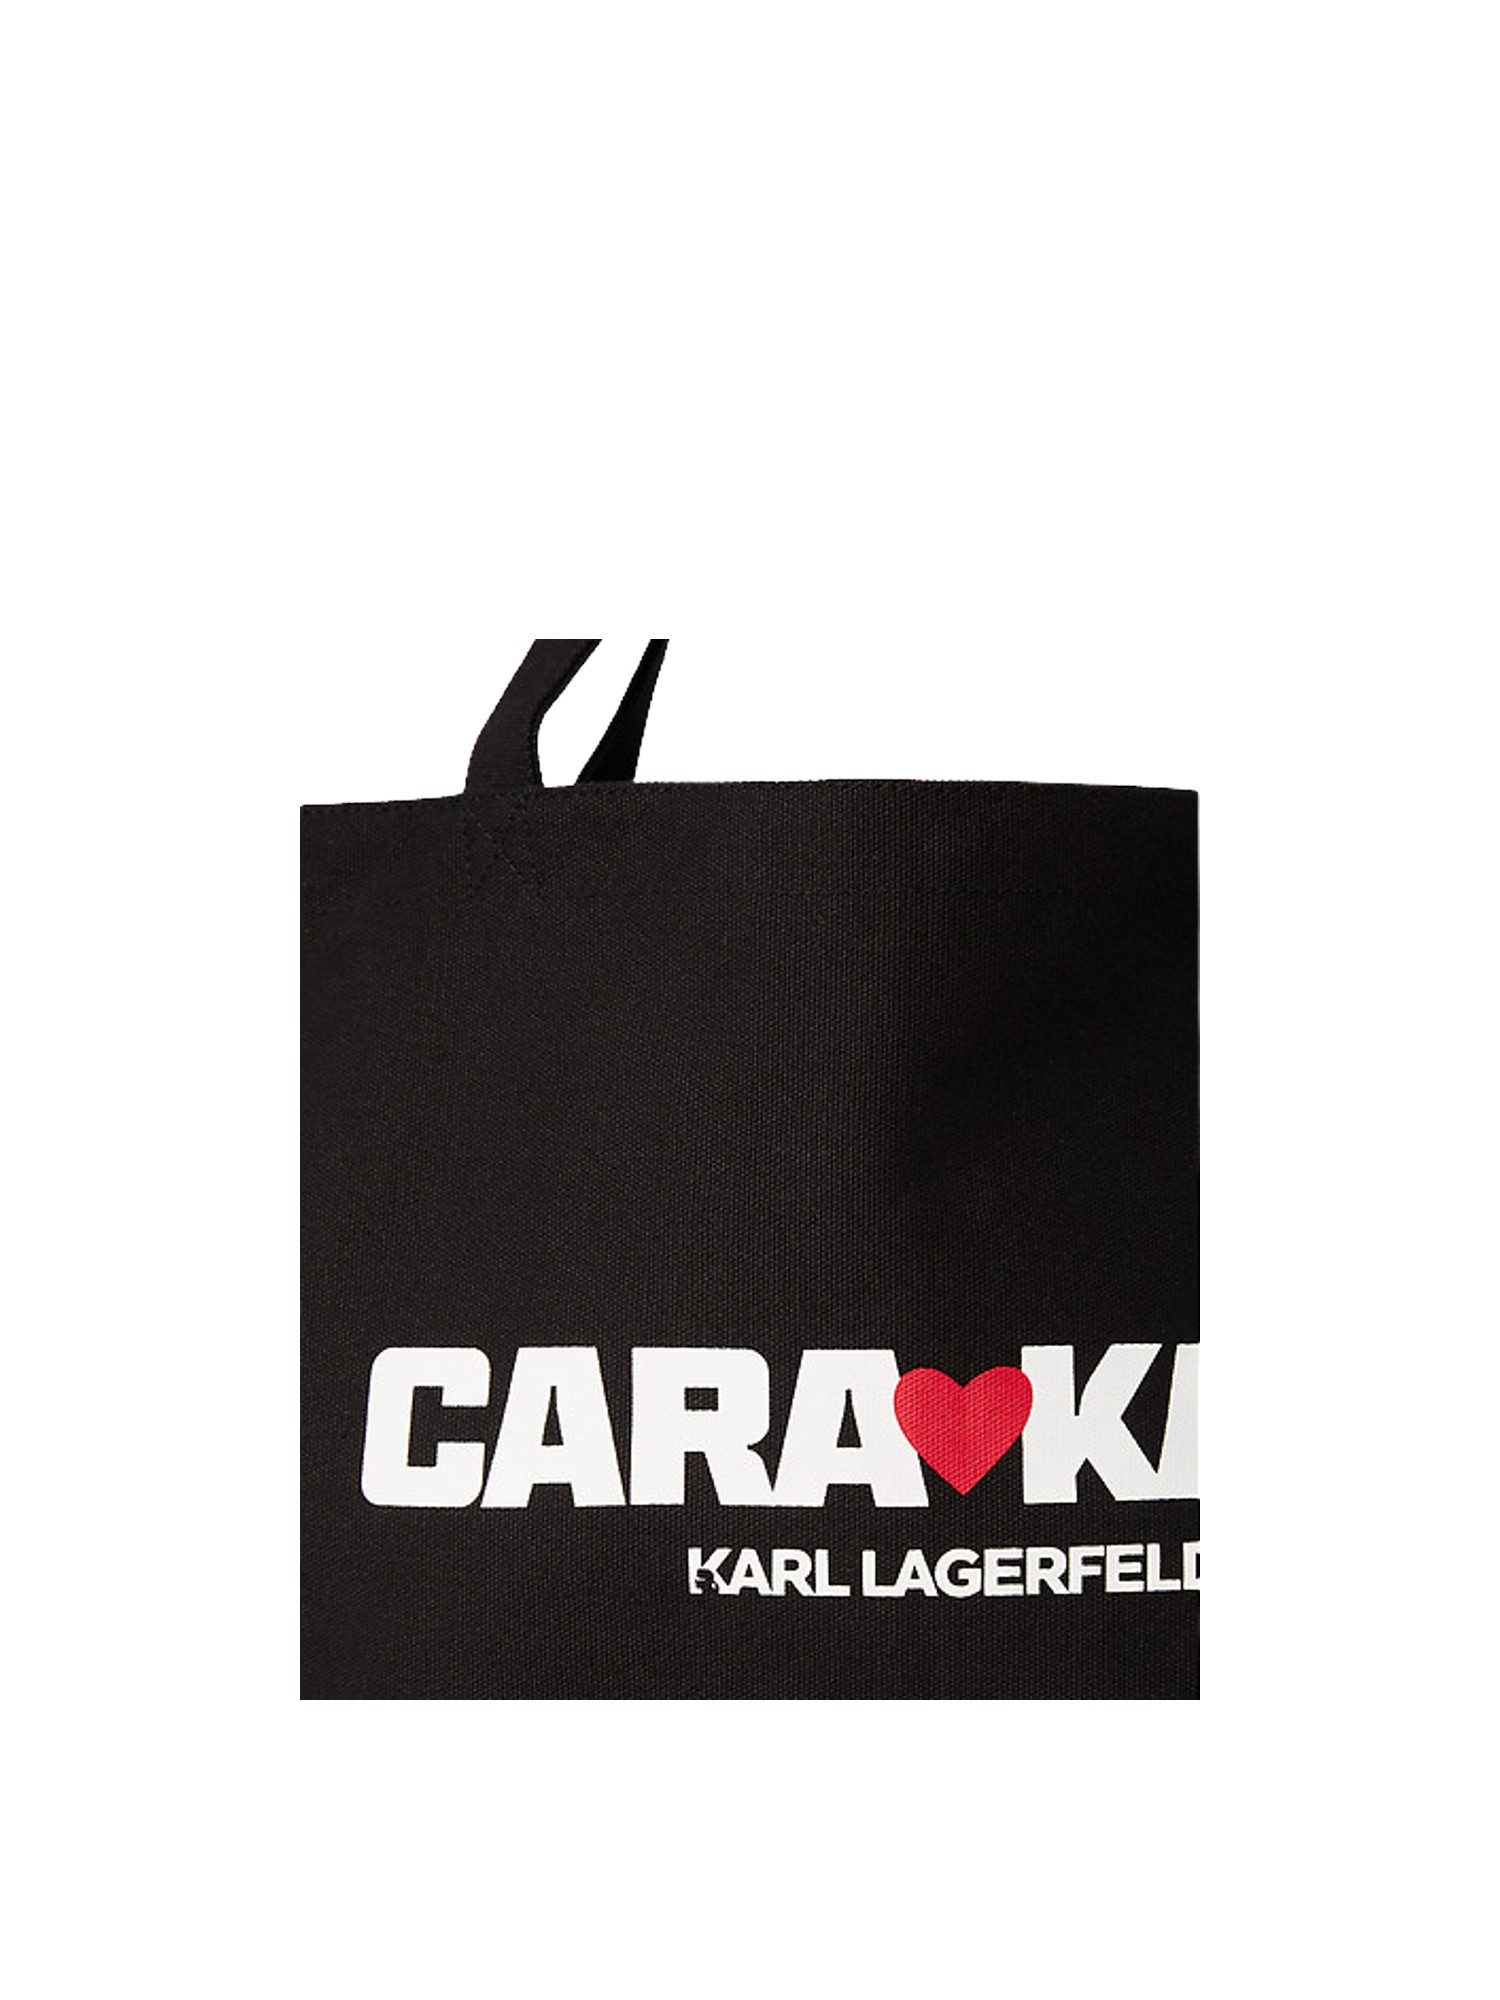 Karl Lagerfeld - Cara loves karl shopper in tela, Black, large image number 4